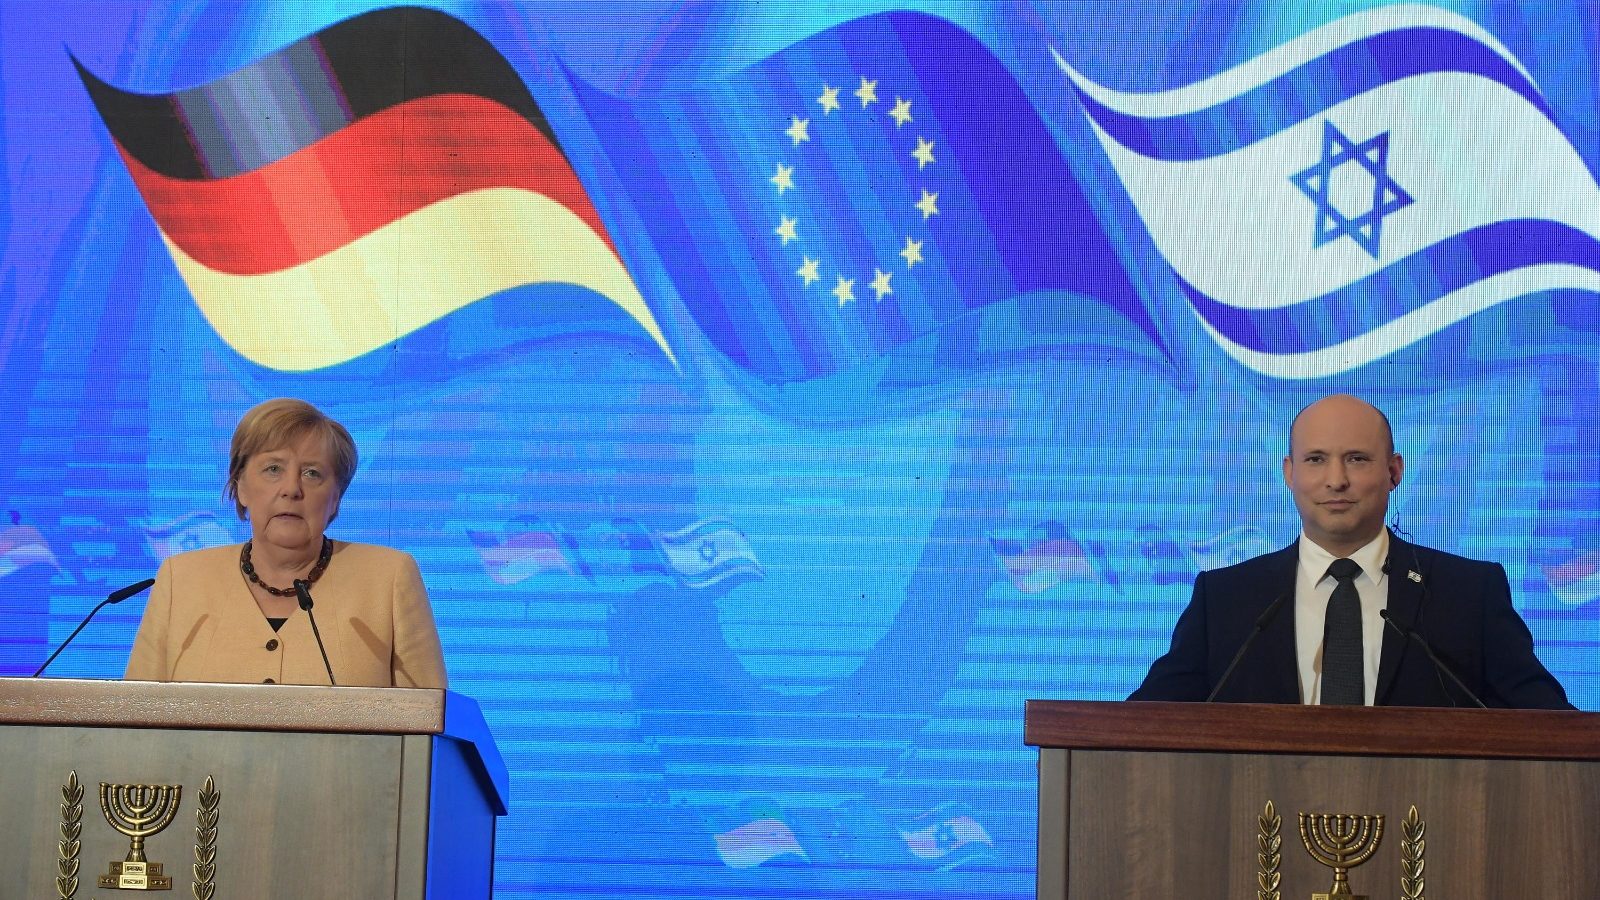 German Chancellor Merkel, in Israel, Calls on Iran To Return to Nuclear Talks